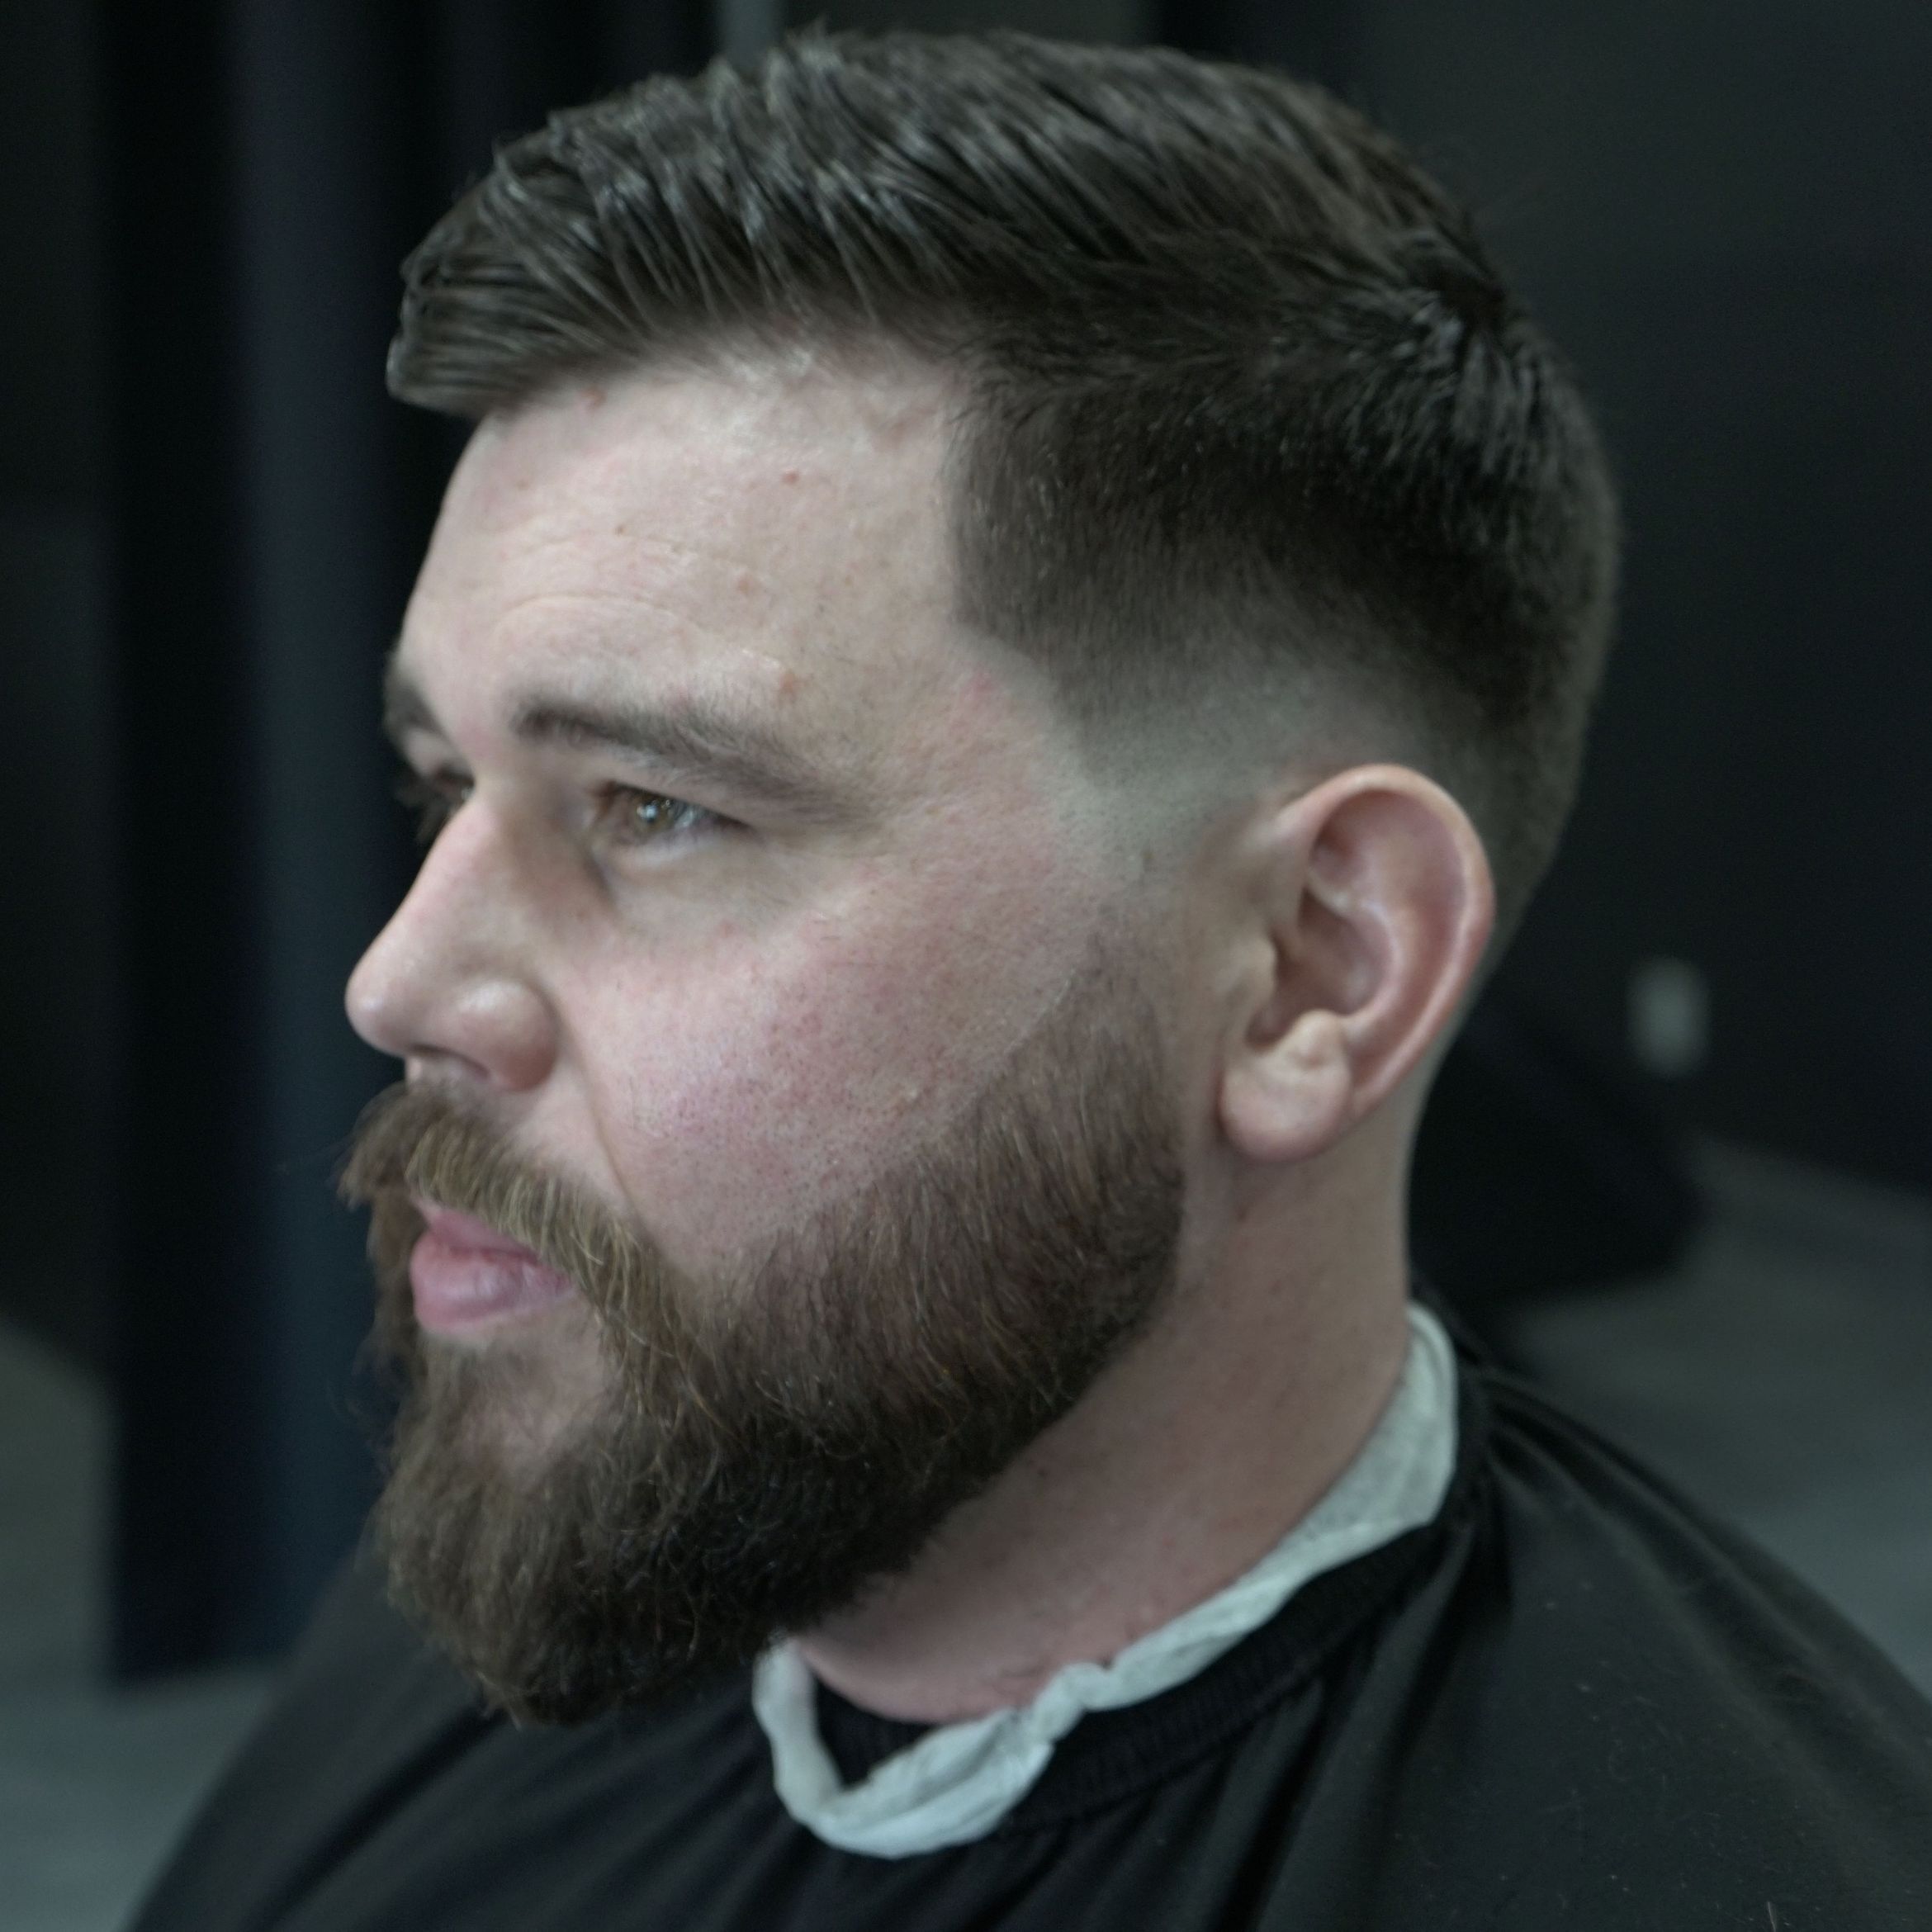 Haircut & beard portfolio